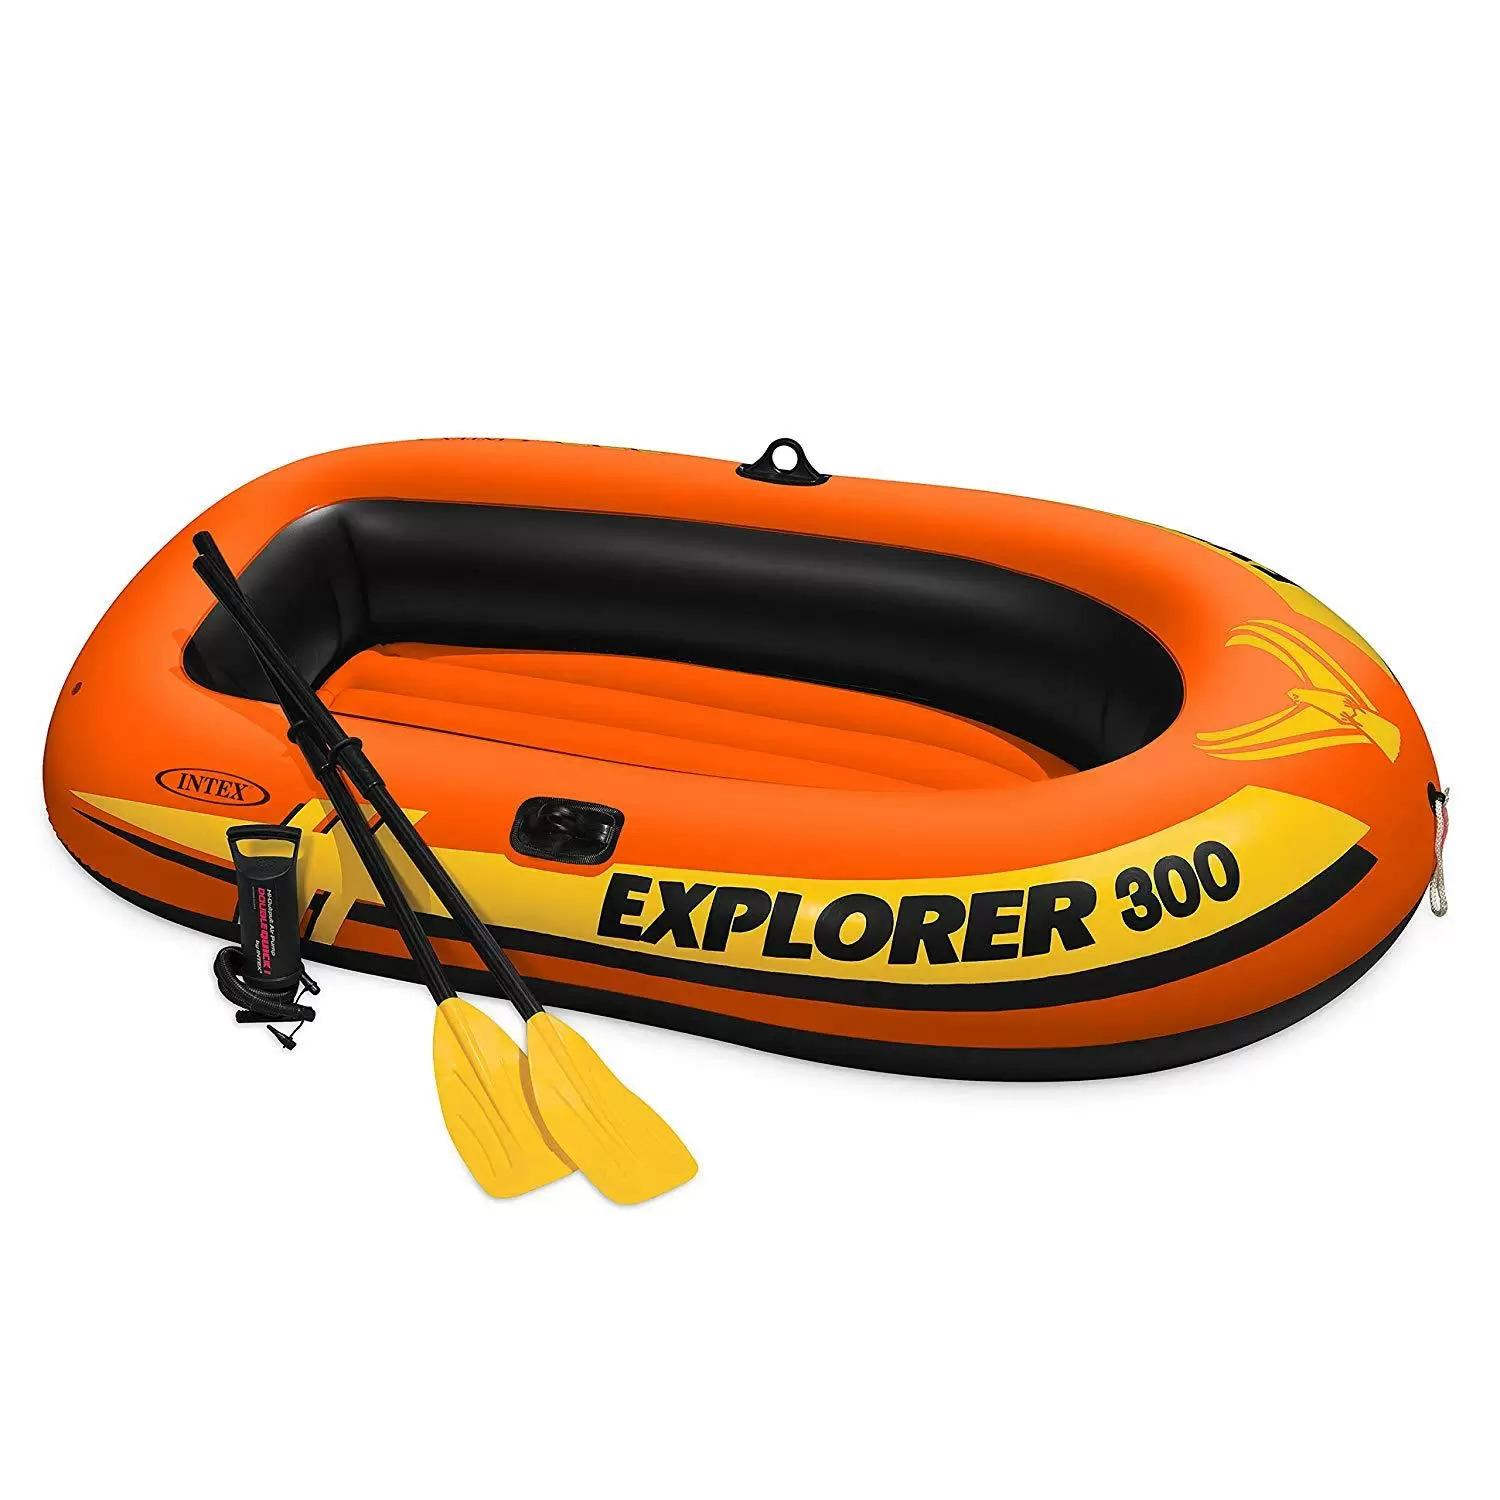 Intex Recreation Explorer 300 2-Person Boat Set for $15.57